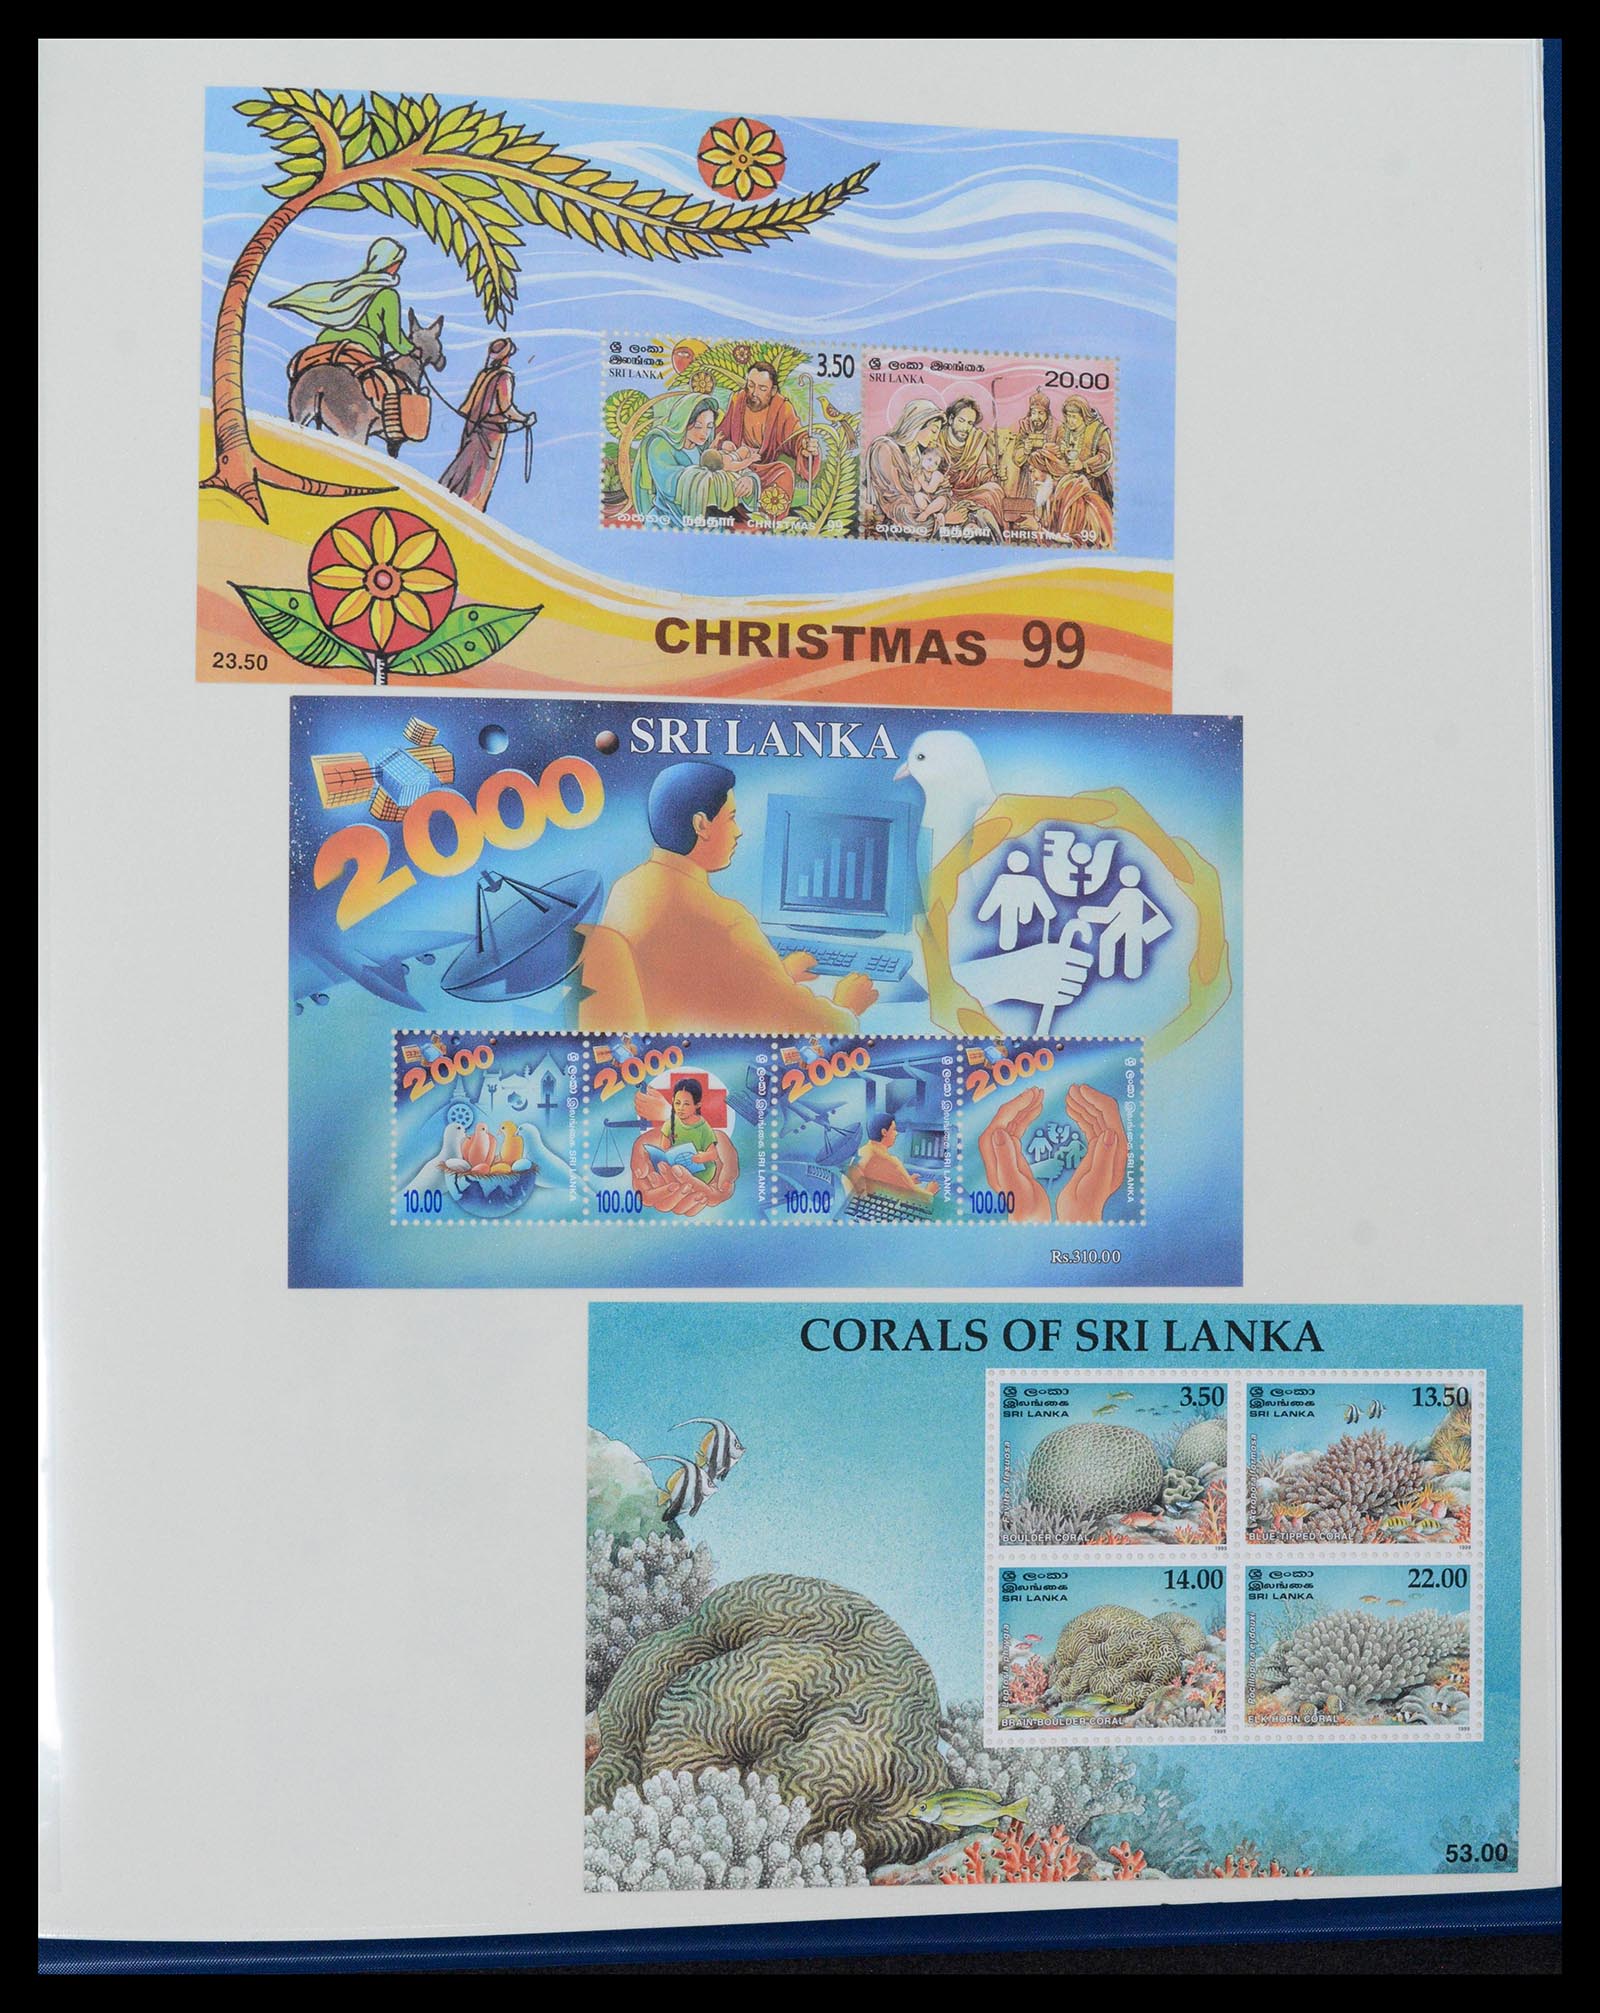 39003 0295 - Stamp collection 39003 Ceylon/Sri Lanka 1857-2003.